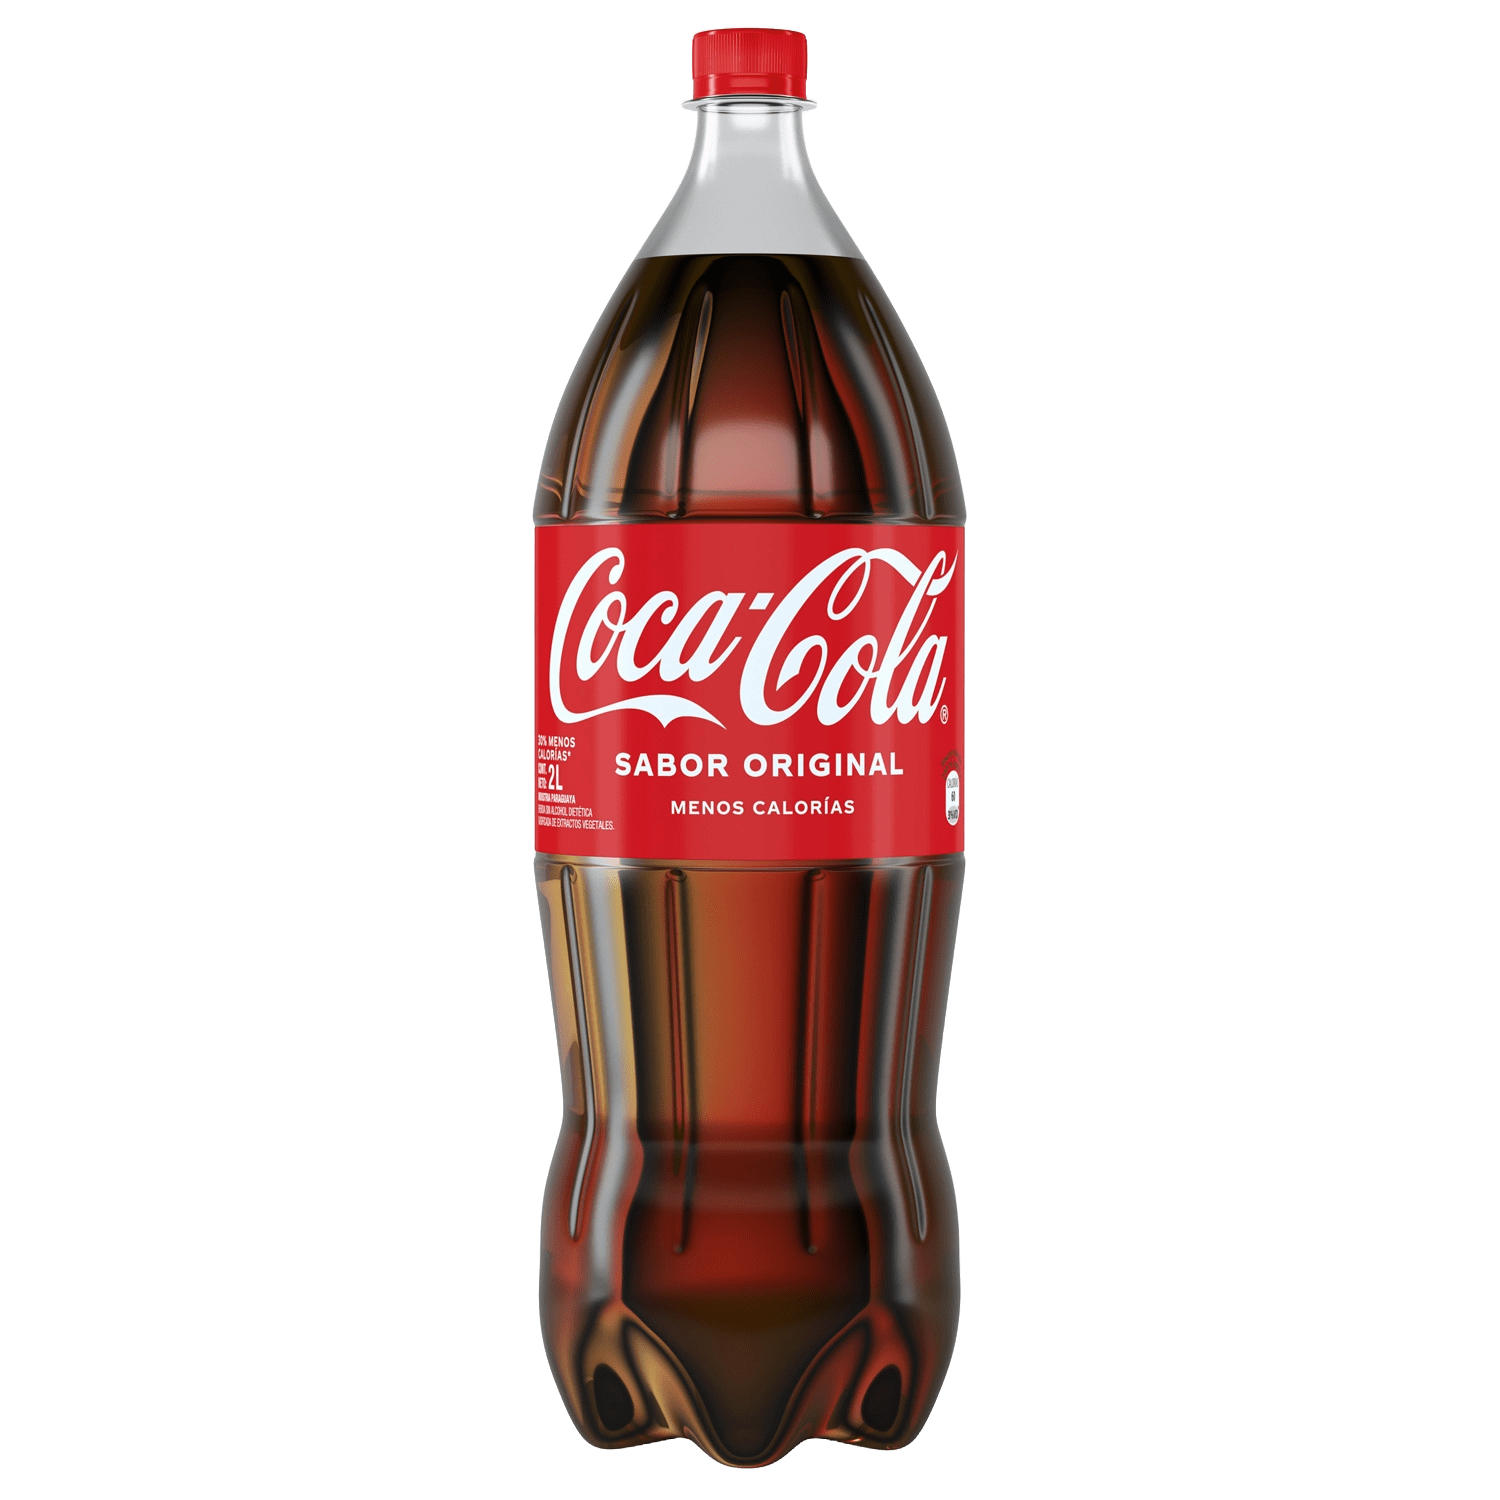 Botella de Coca-Cola Sabor Original Menos Calorías 2L 